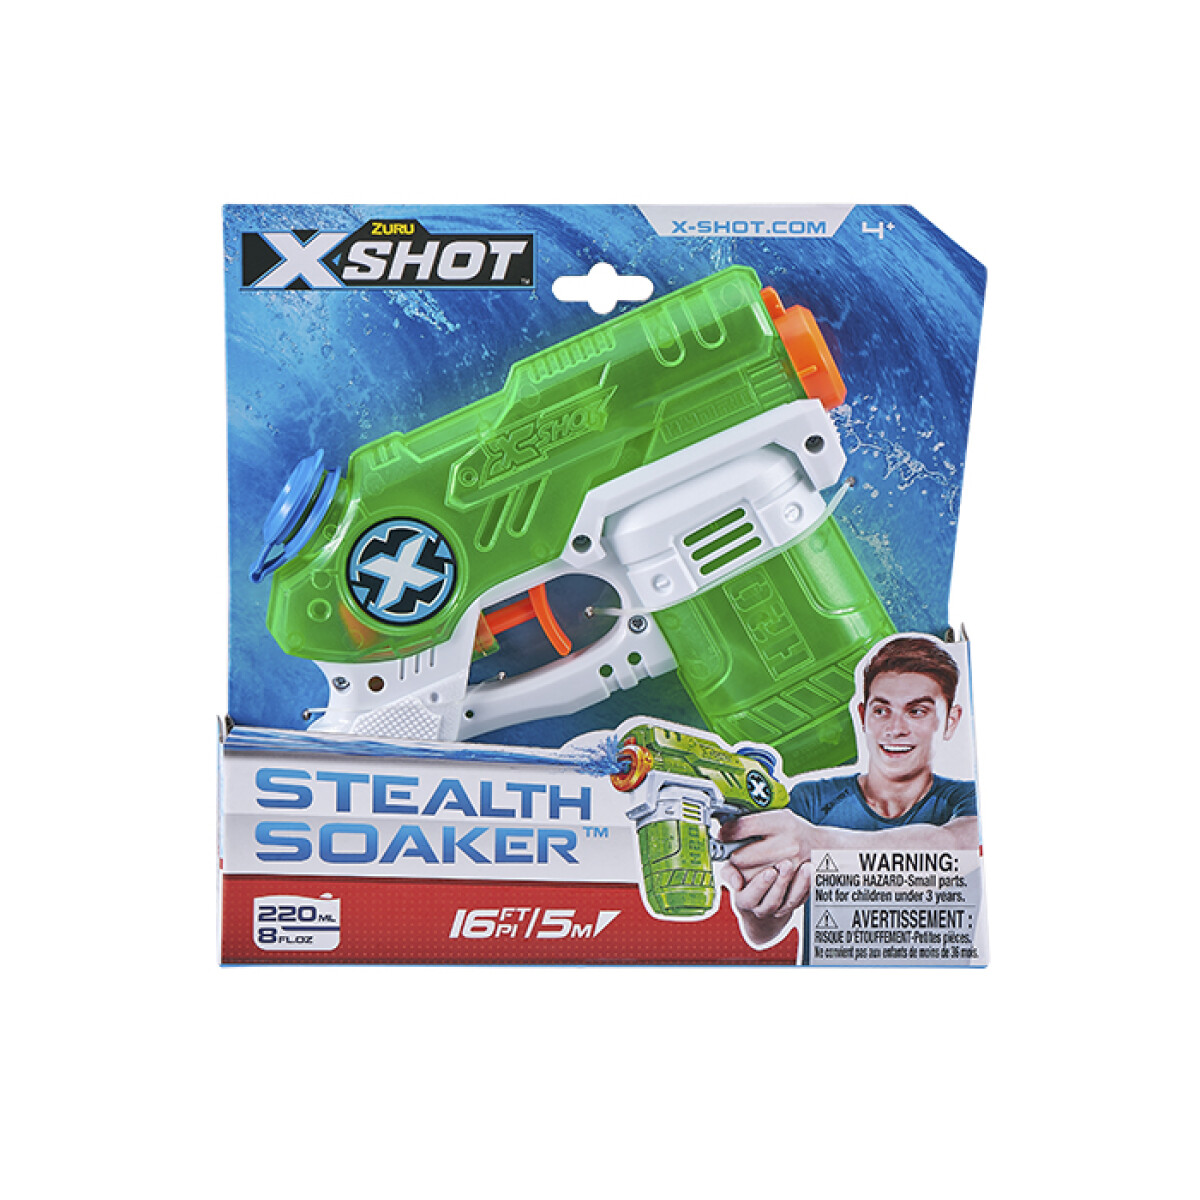 Pistola de Agua X-shot Warfare Stealth Soaker - 001 